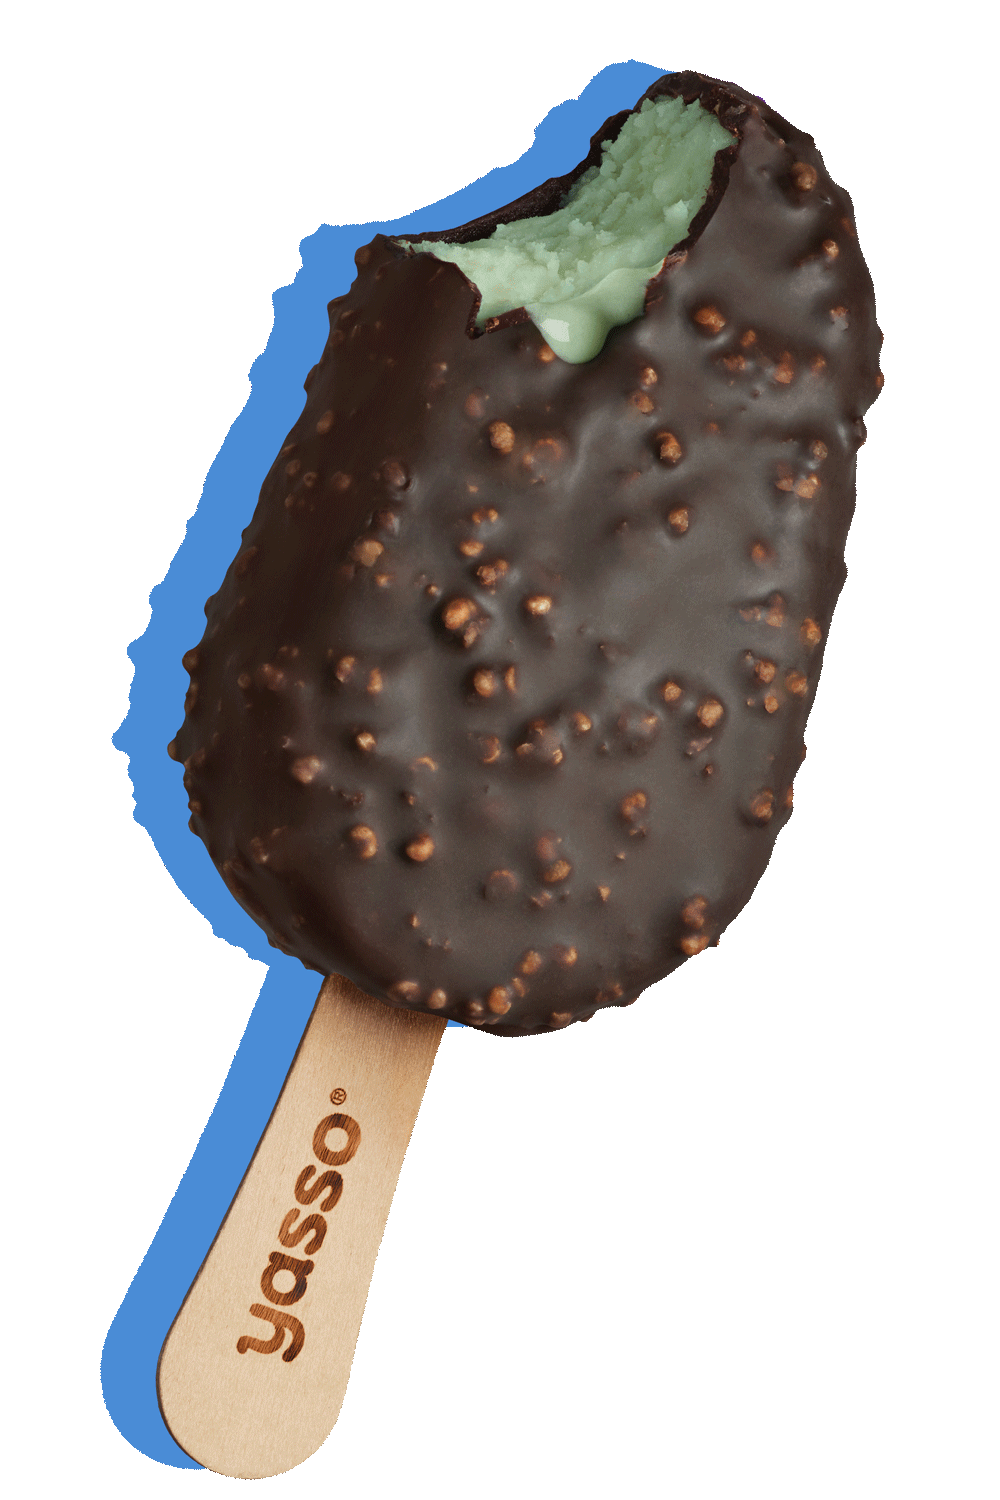 Cool Mint Crunch Ice Cream